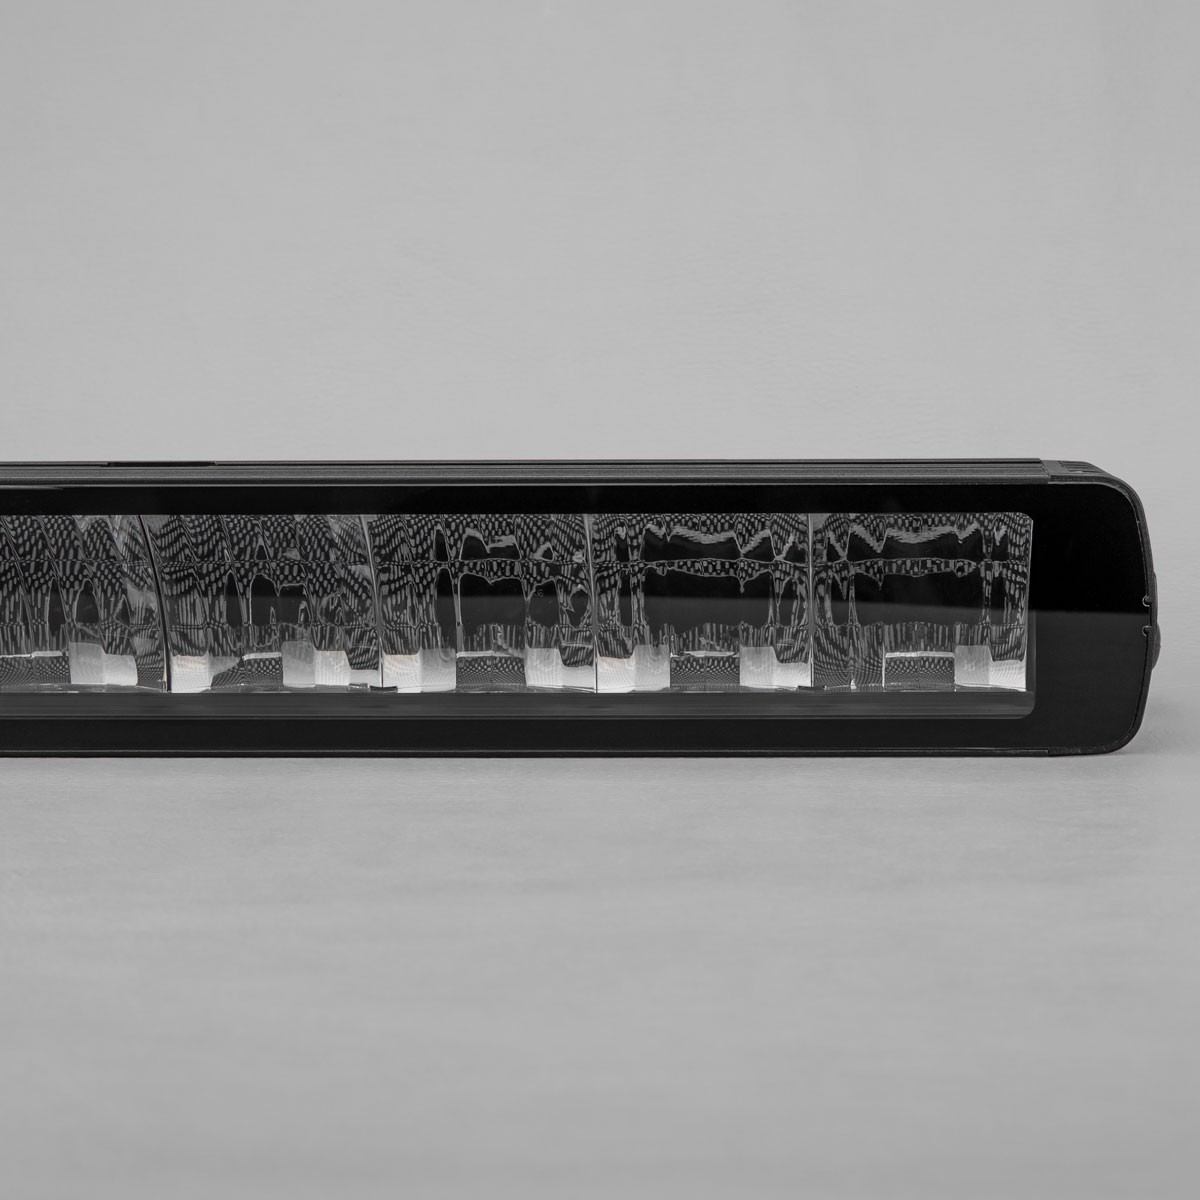 STEDI ST-X 50 inch LED light bar